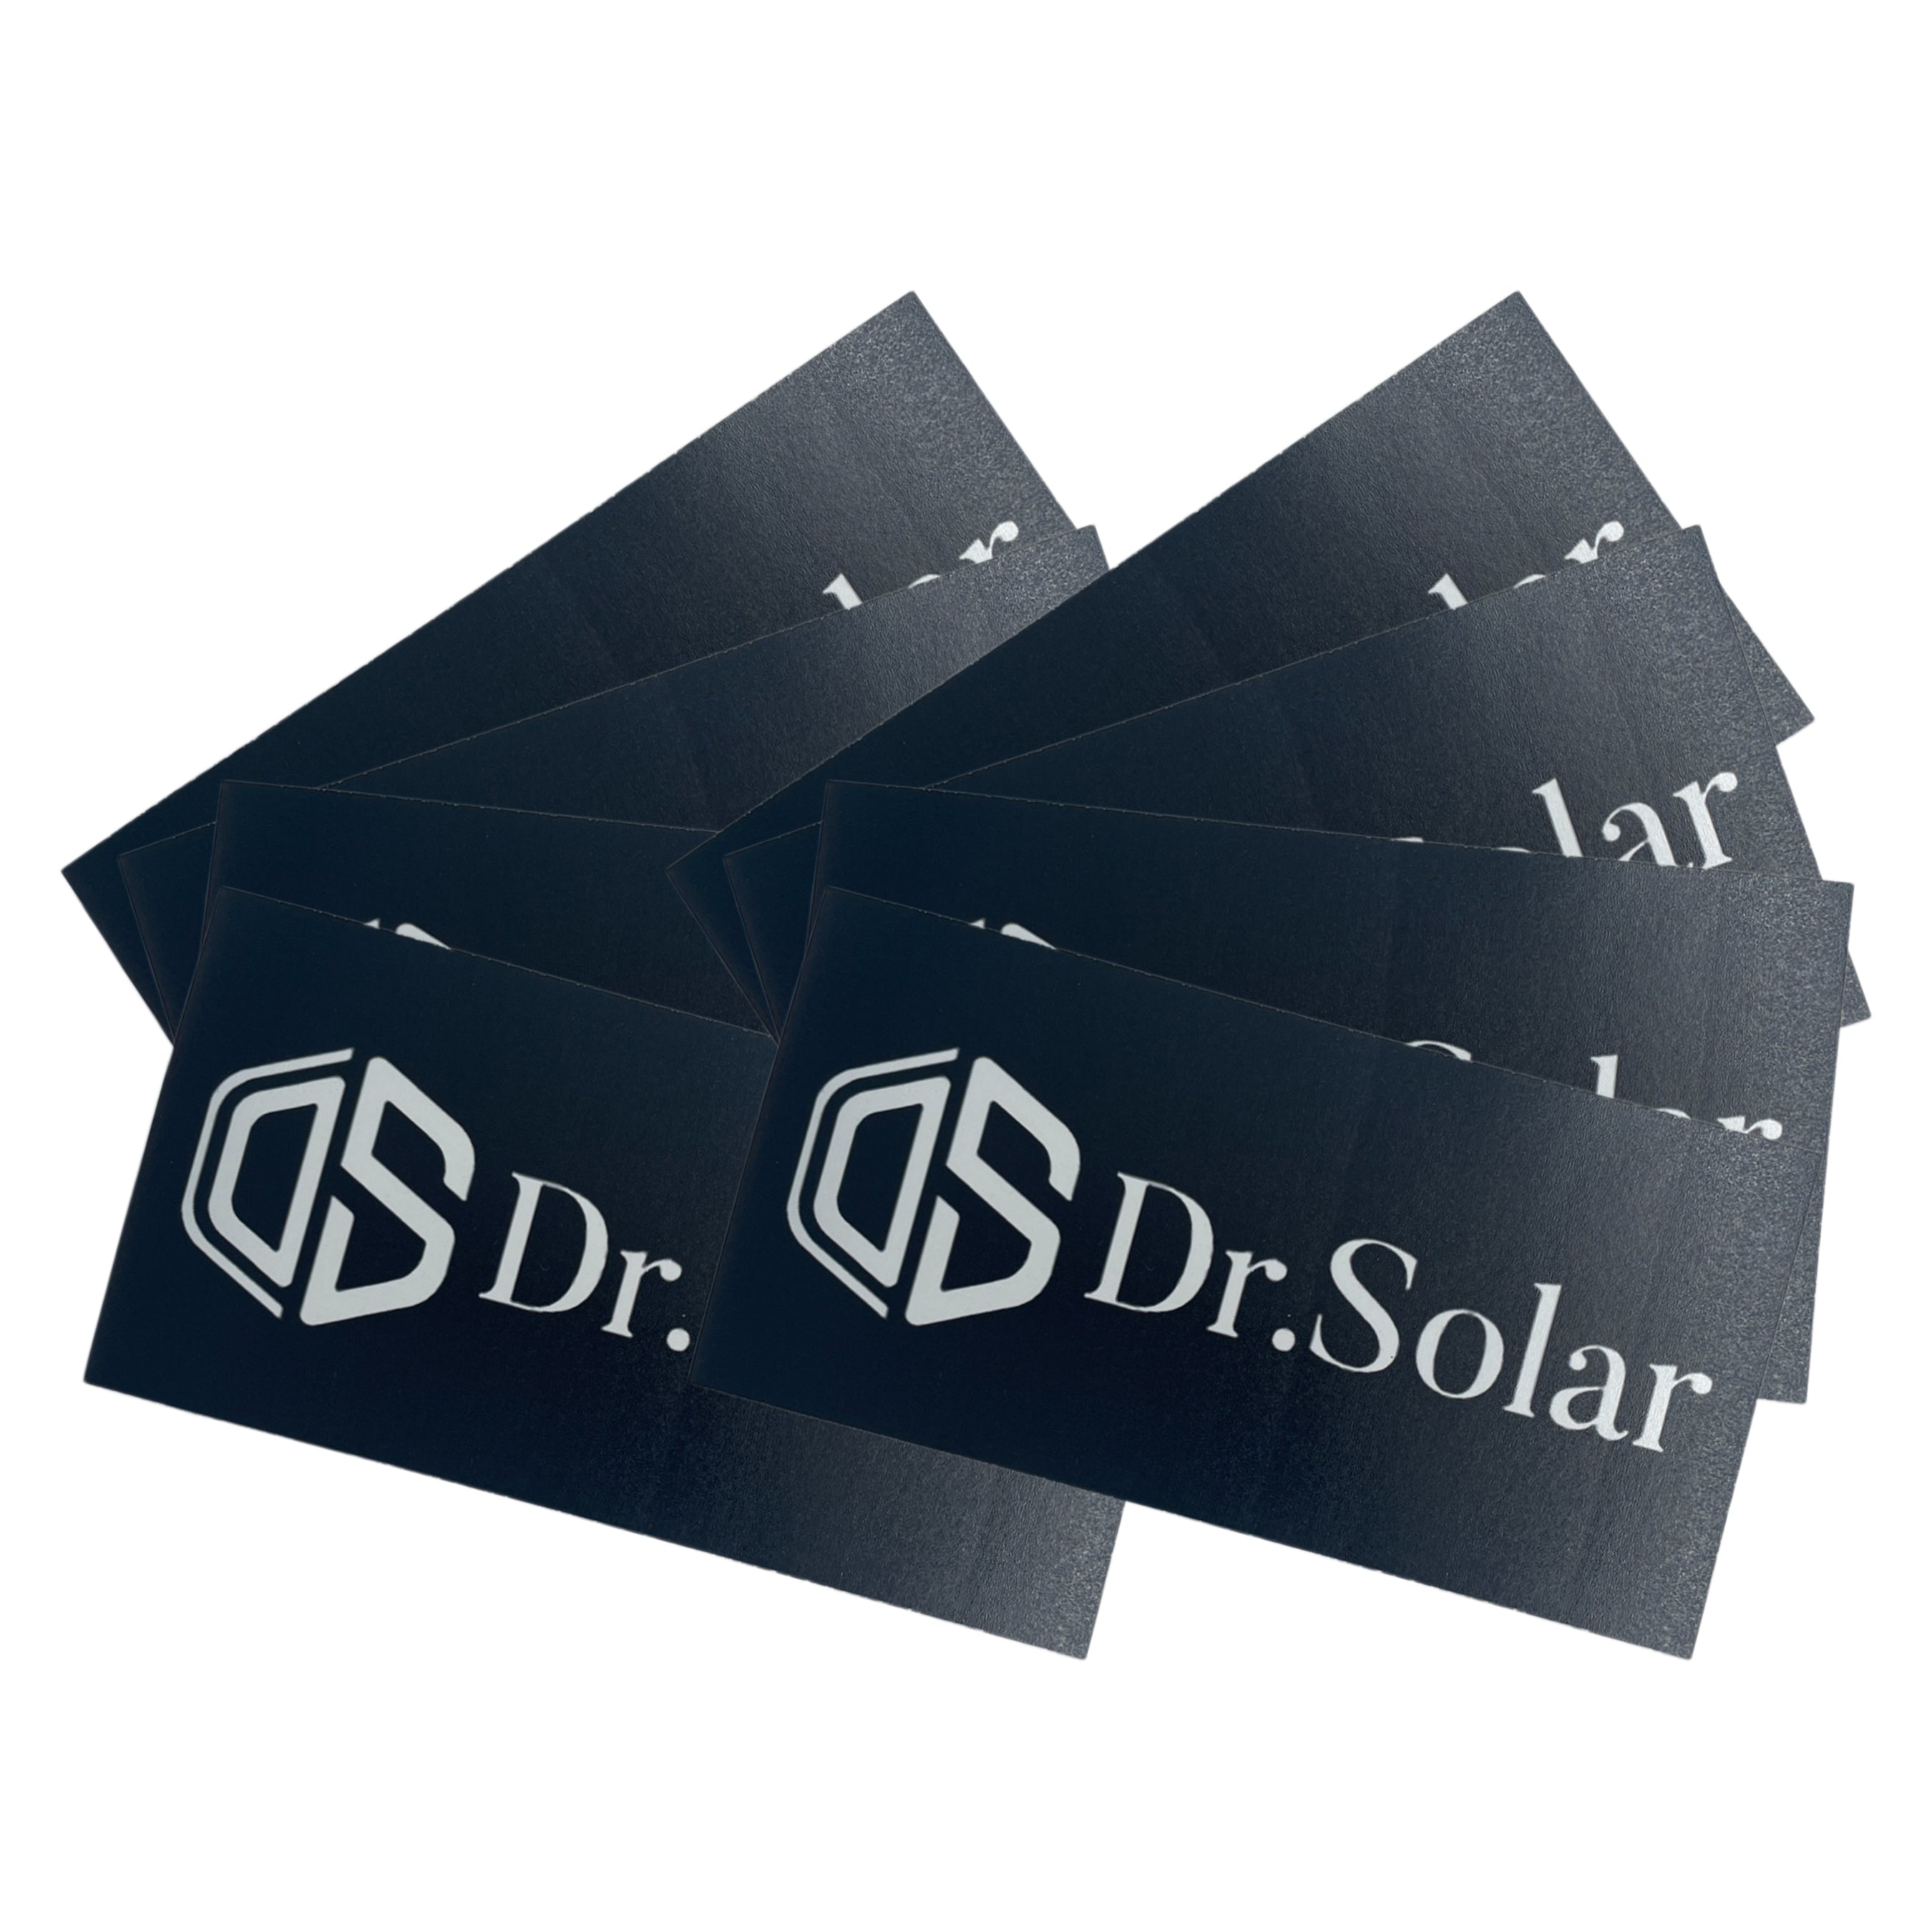 Dr.Solar Logo Black Rectangle Sticker for Laptop, Journal, Notesbook, Phone, Computer, Luggage